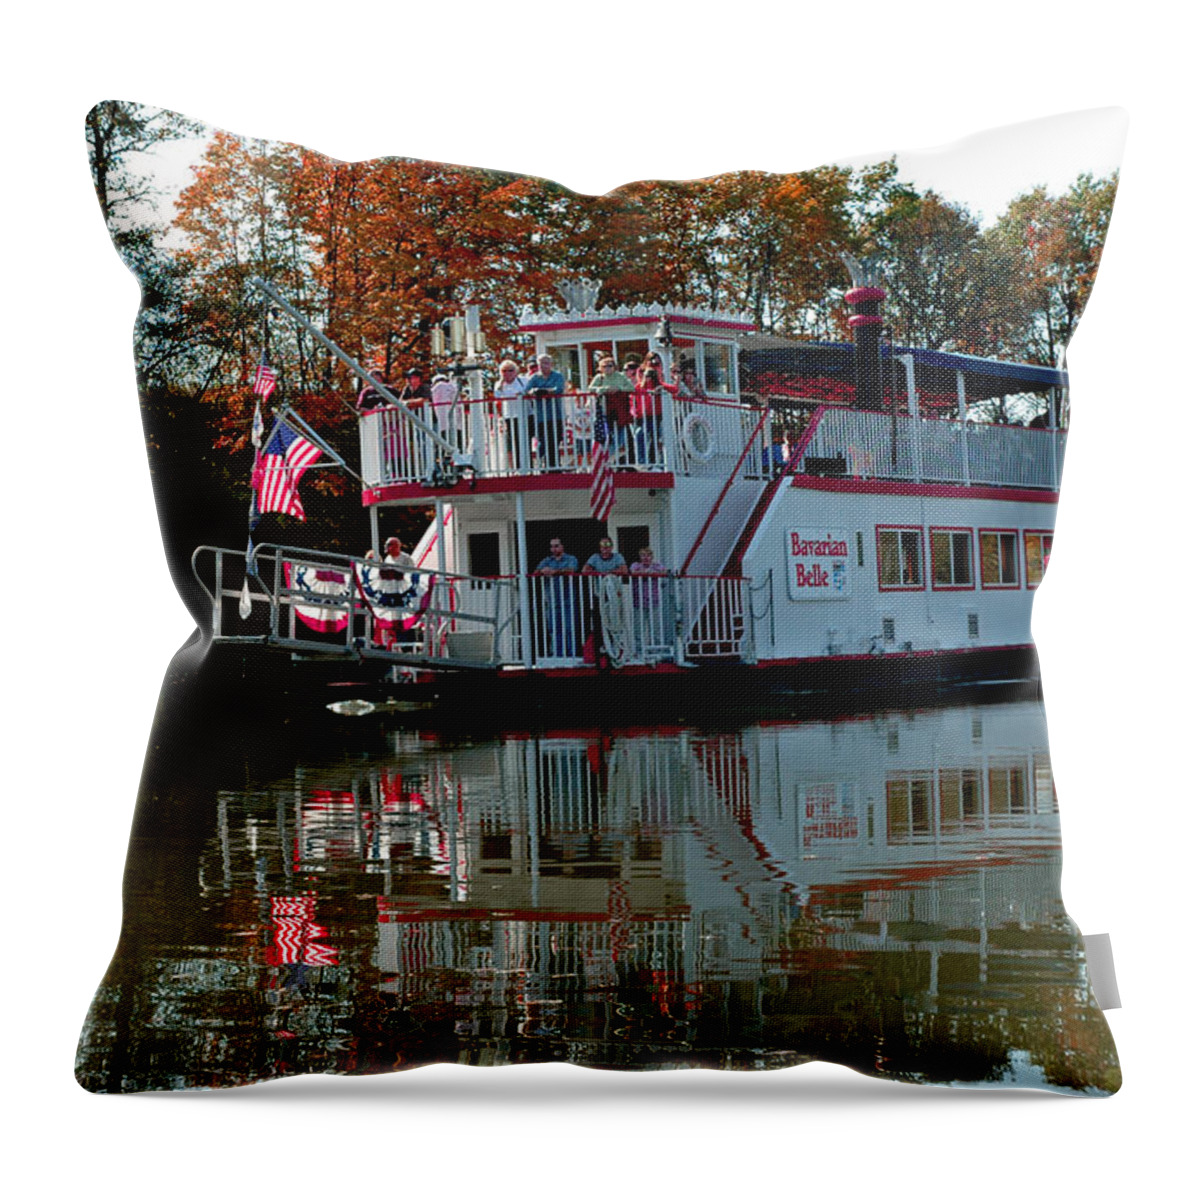 Usa Throw Pillow featuring the photograph Bavarian Belle Riverboat by LeeAnn McLaneGoetz McLaneGoetzStudioLLCcom